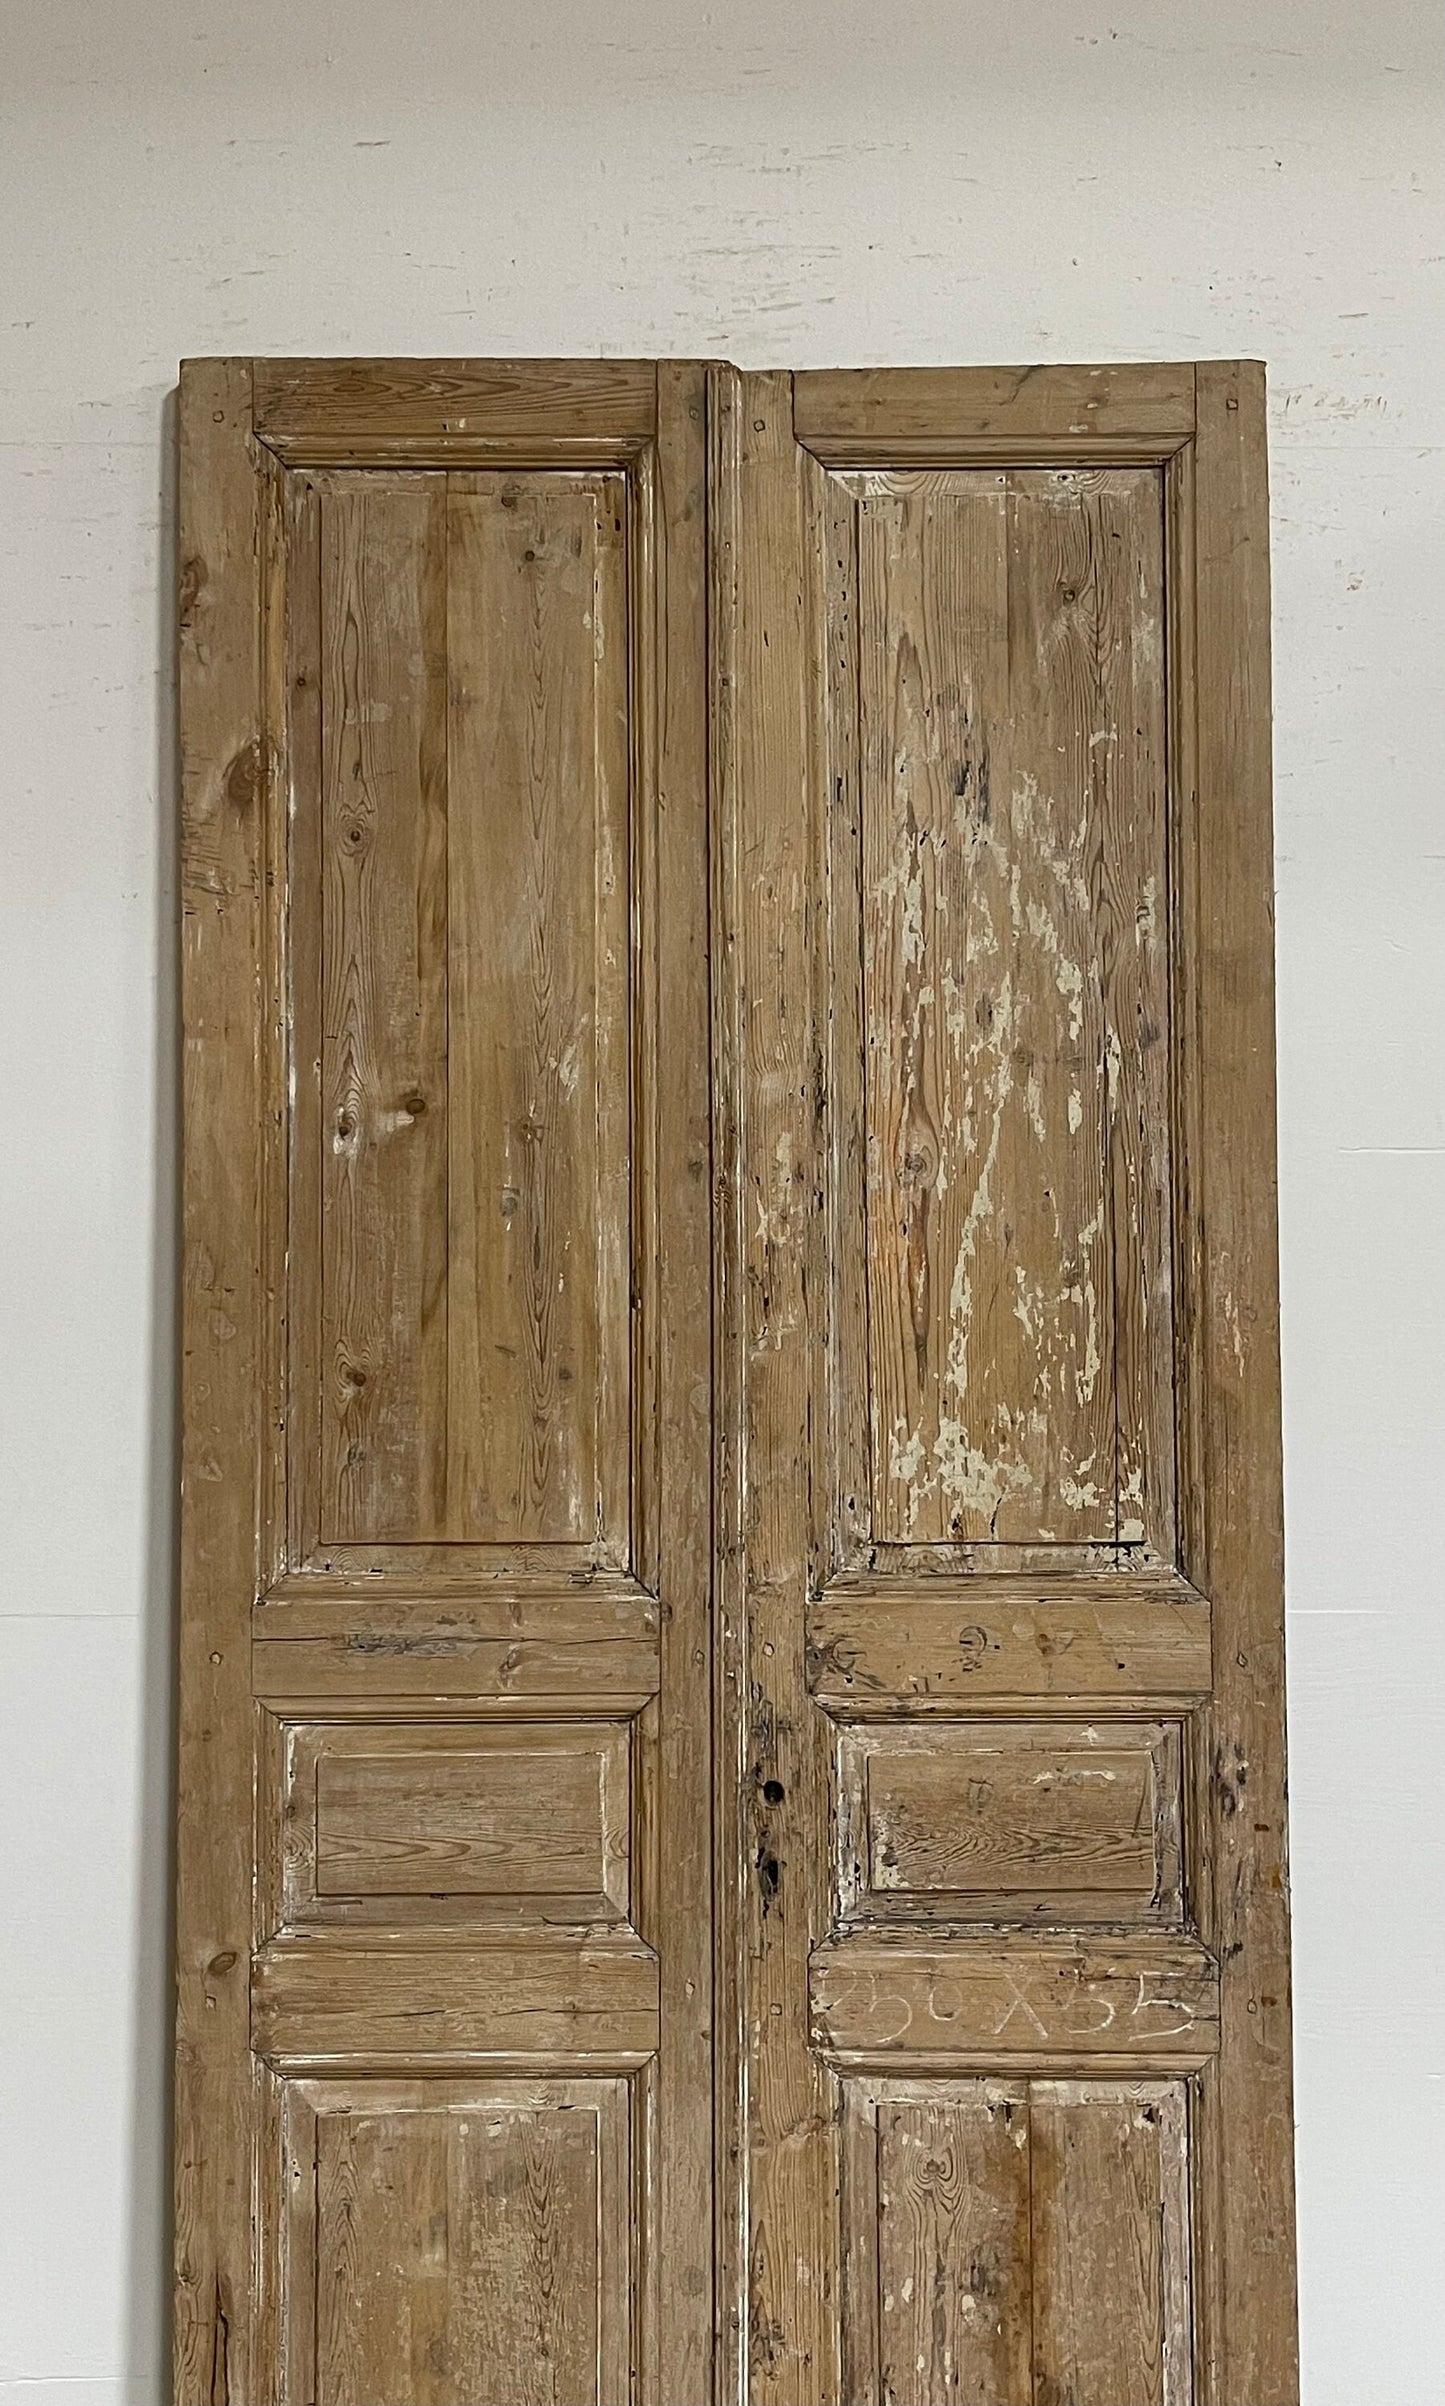 Antique French panel doors (98.75x43.75) G0137s